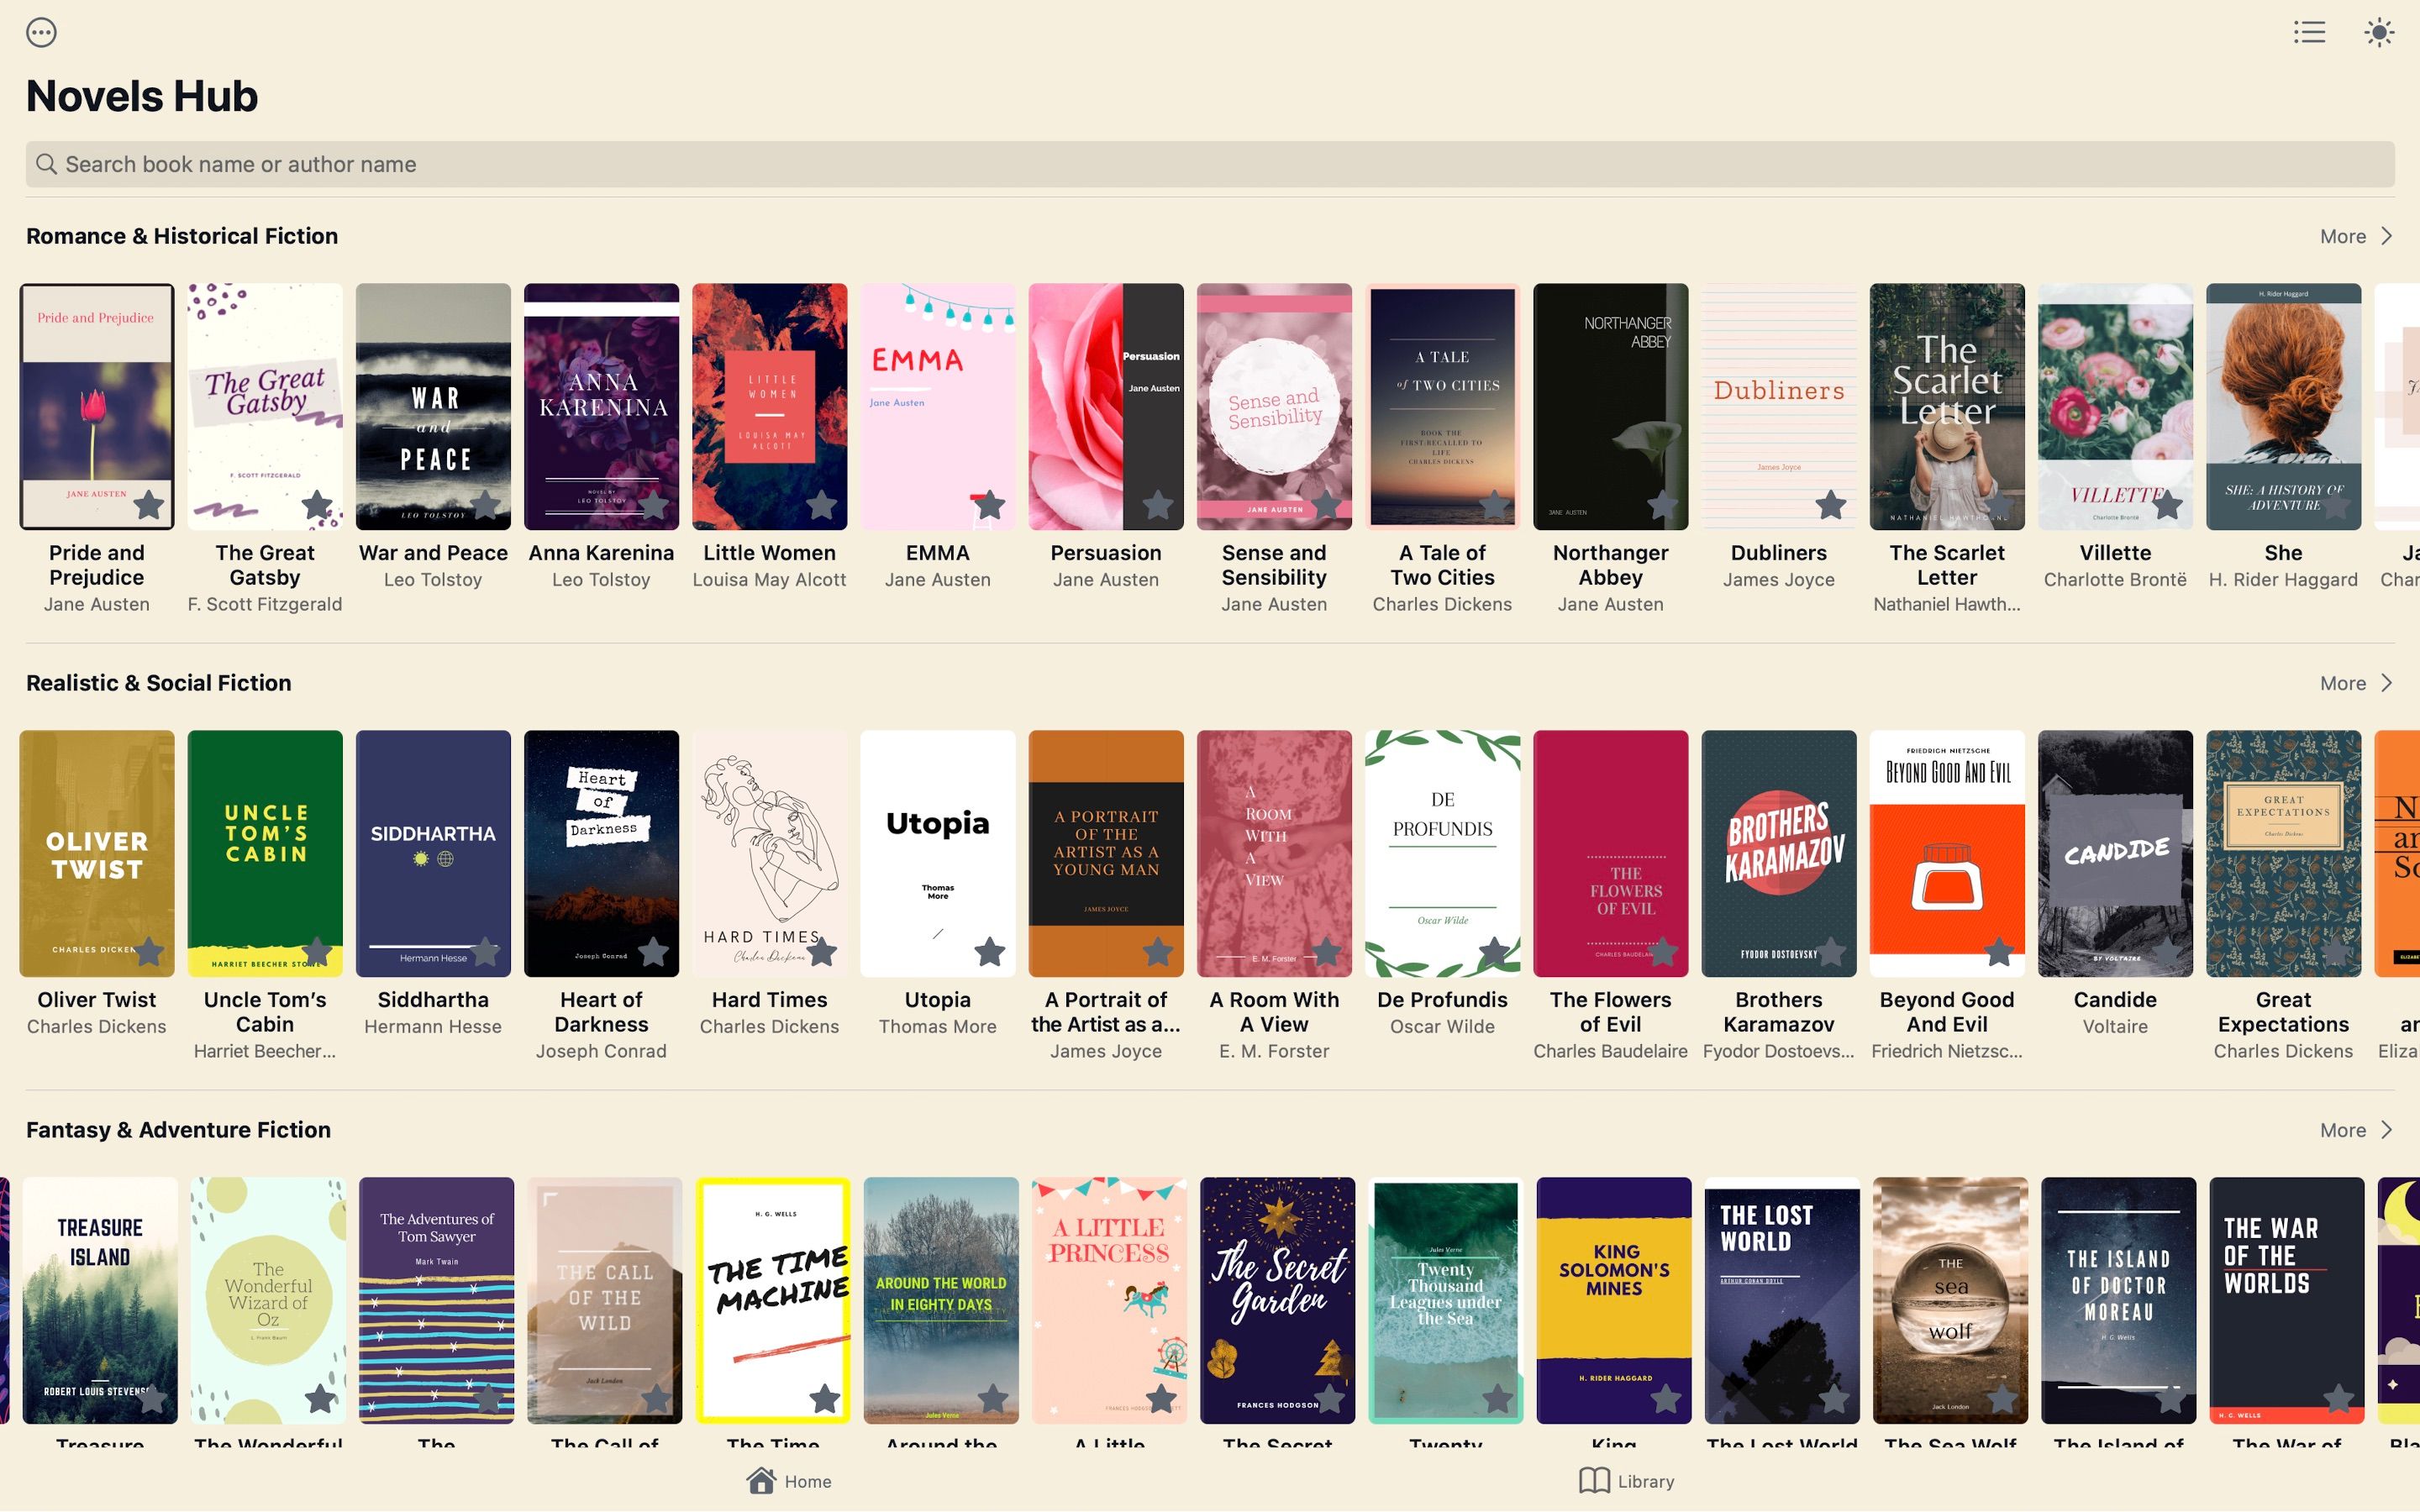 Novels Hub with rows of e-books